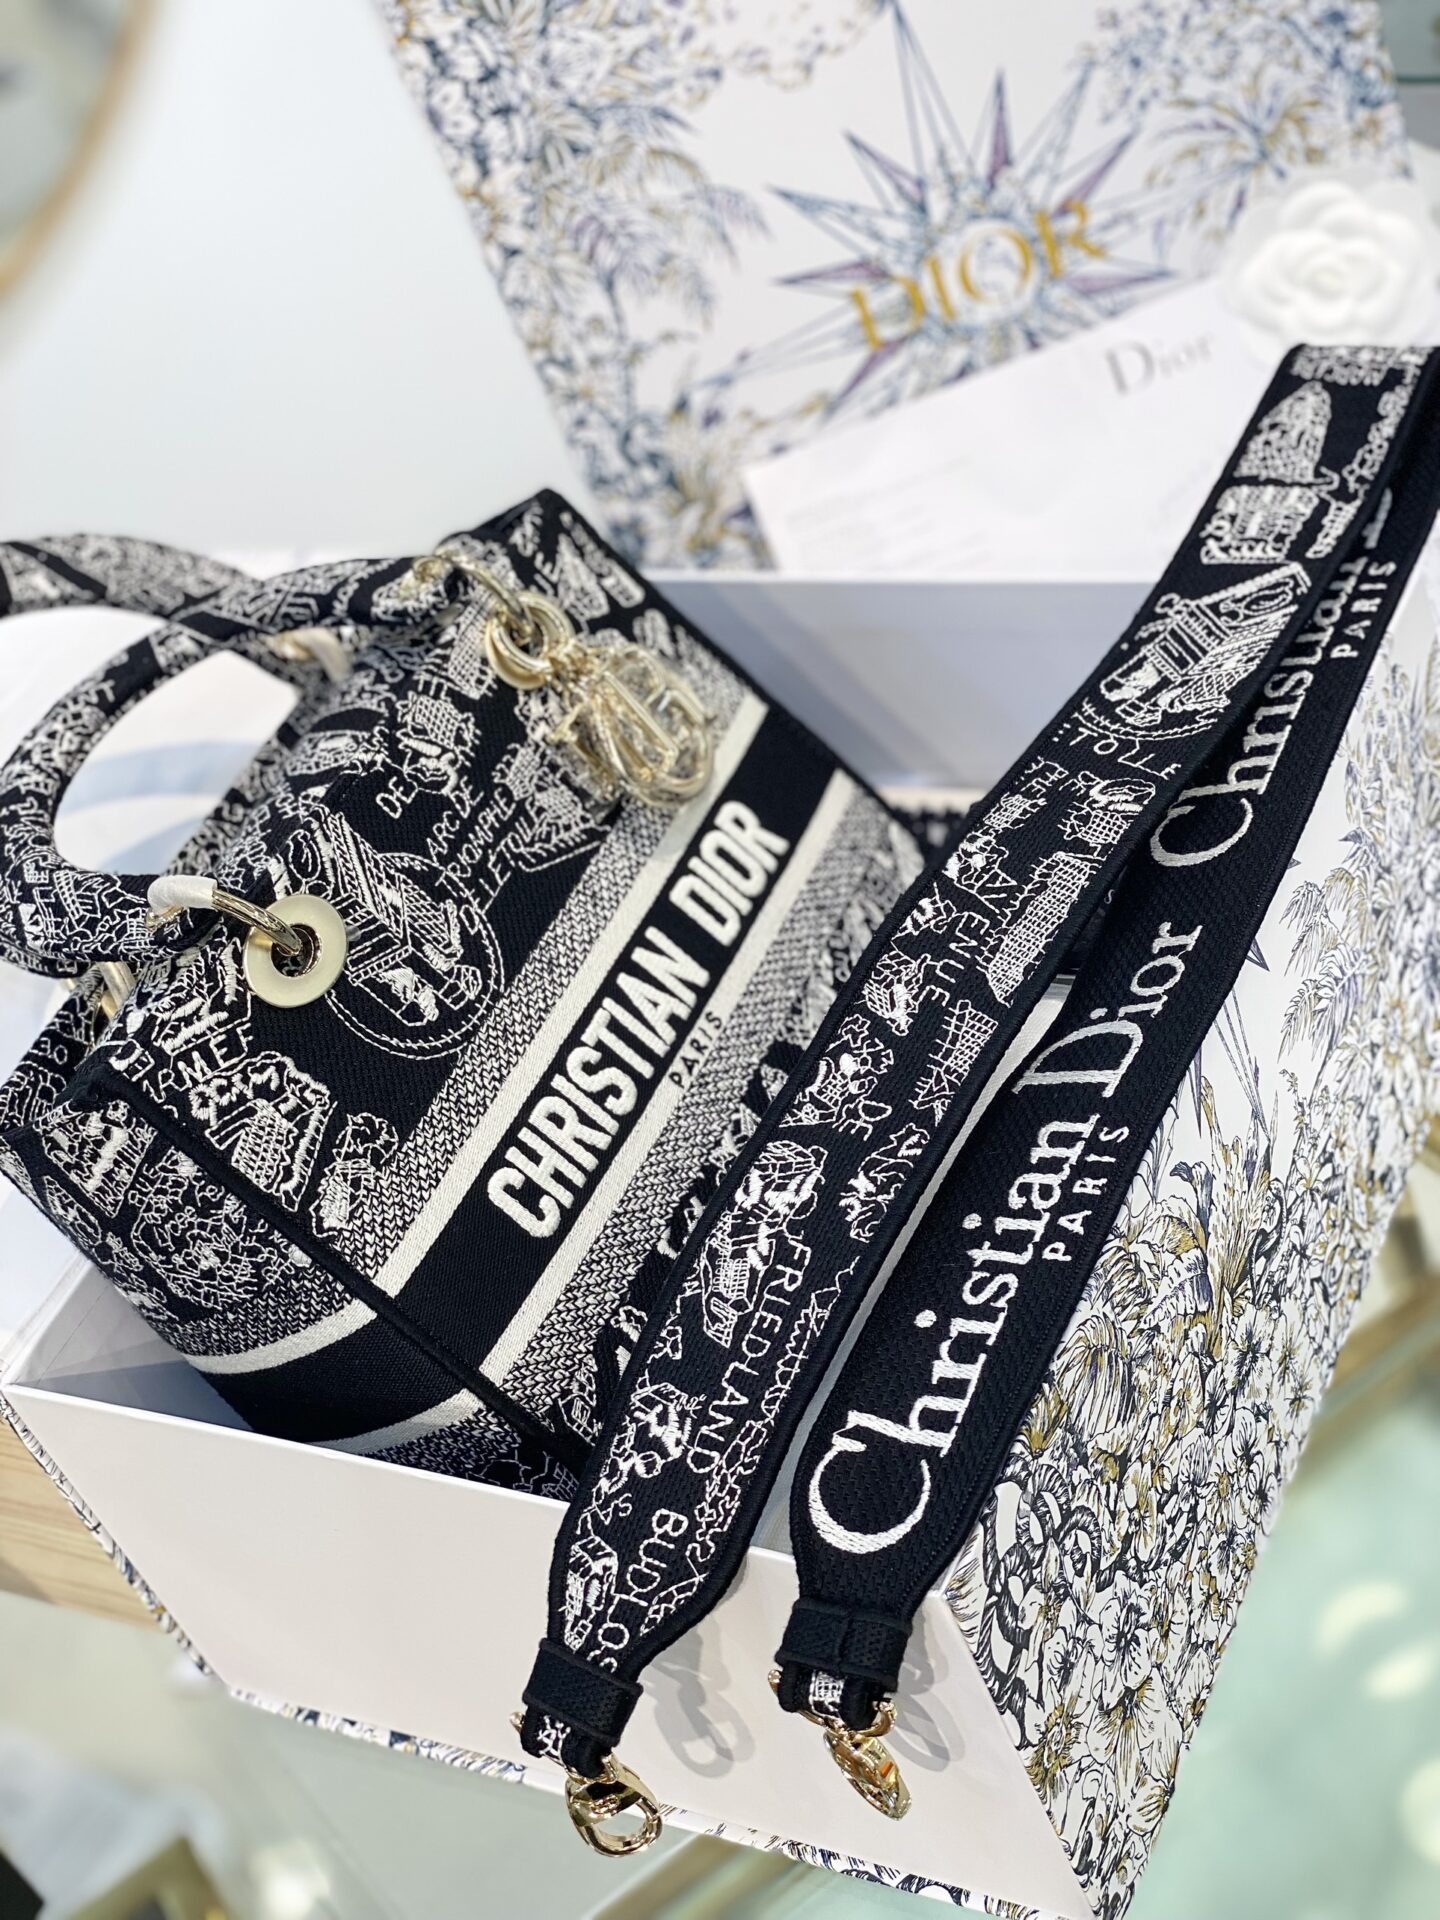 Mini Lady D-Lite Bag White and Black Plan de Paris Embroidery